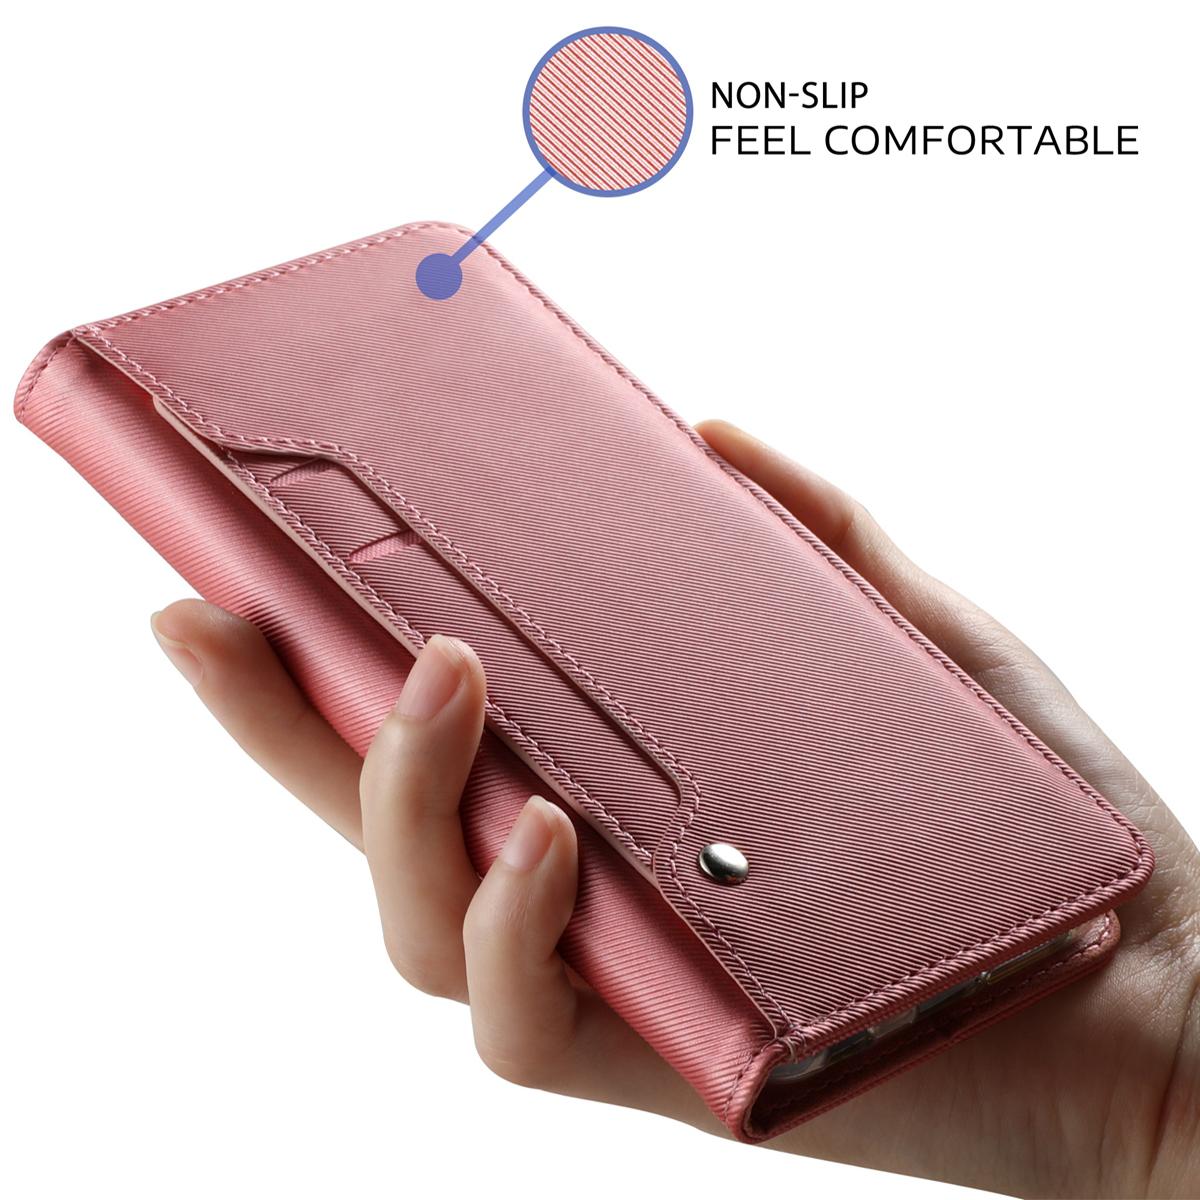 Plånboksfodral Spegel iPhone 11 Pro Rosa Guld